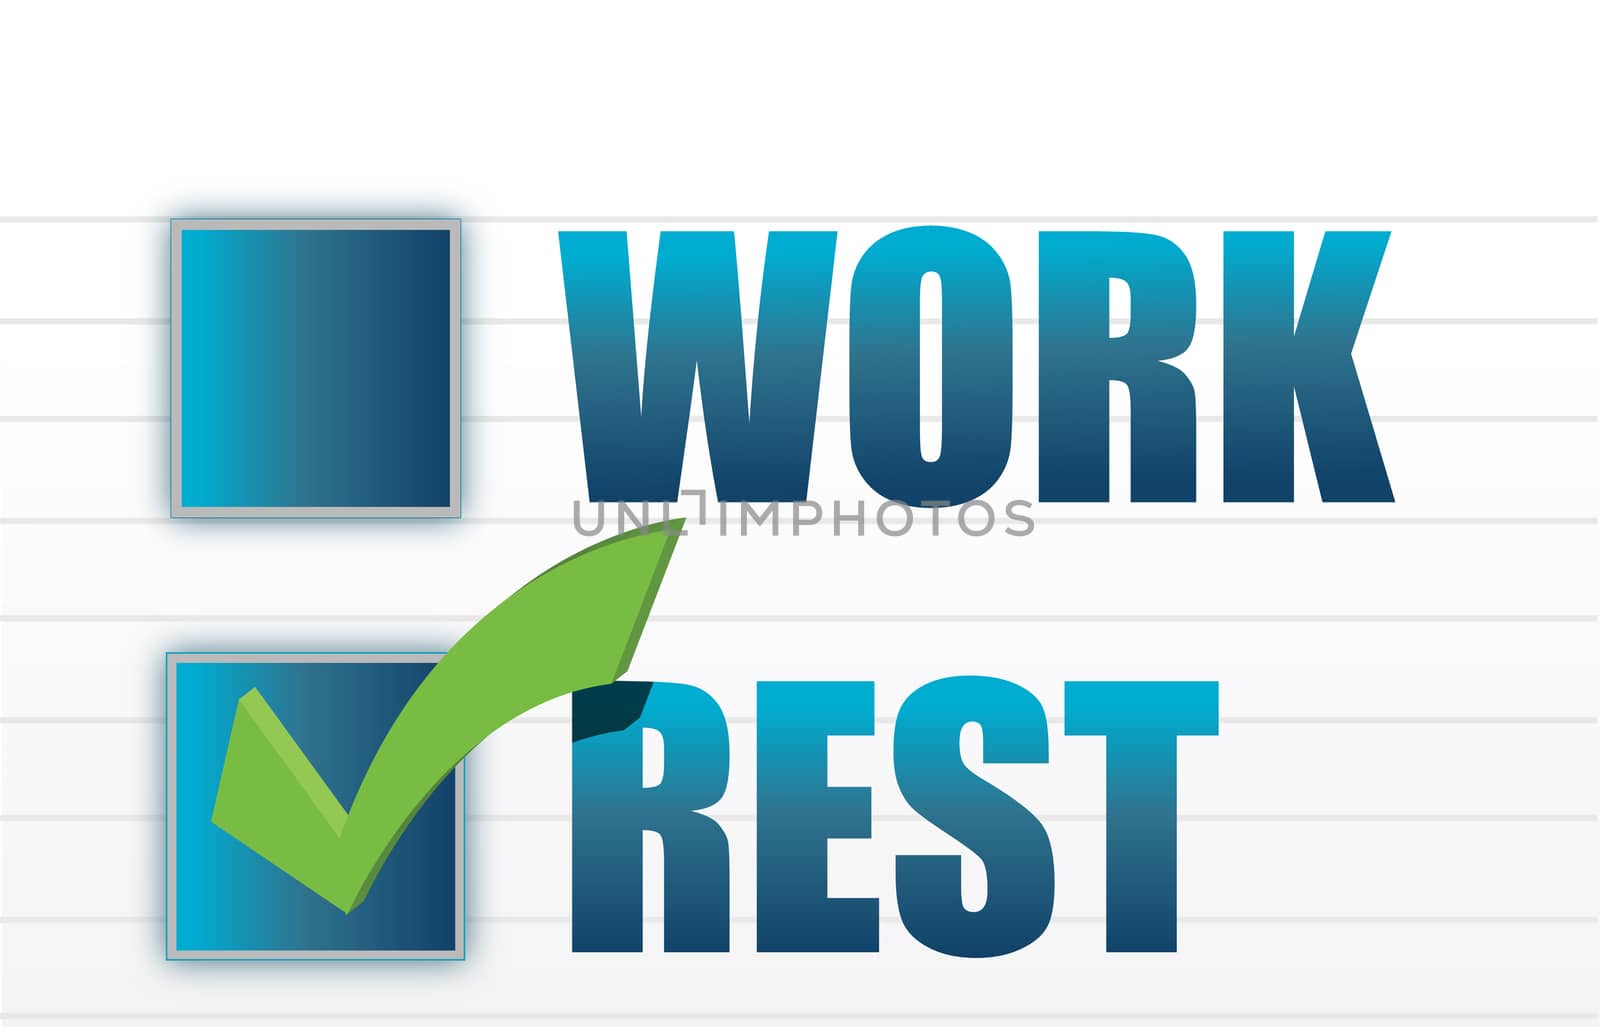 rest over work check mark selection illustration